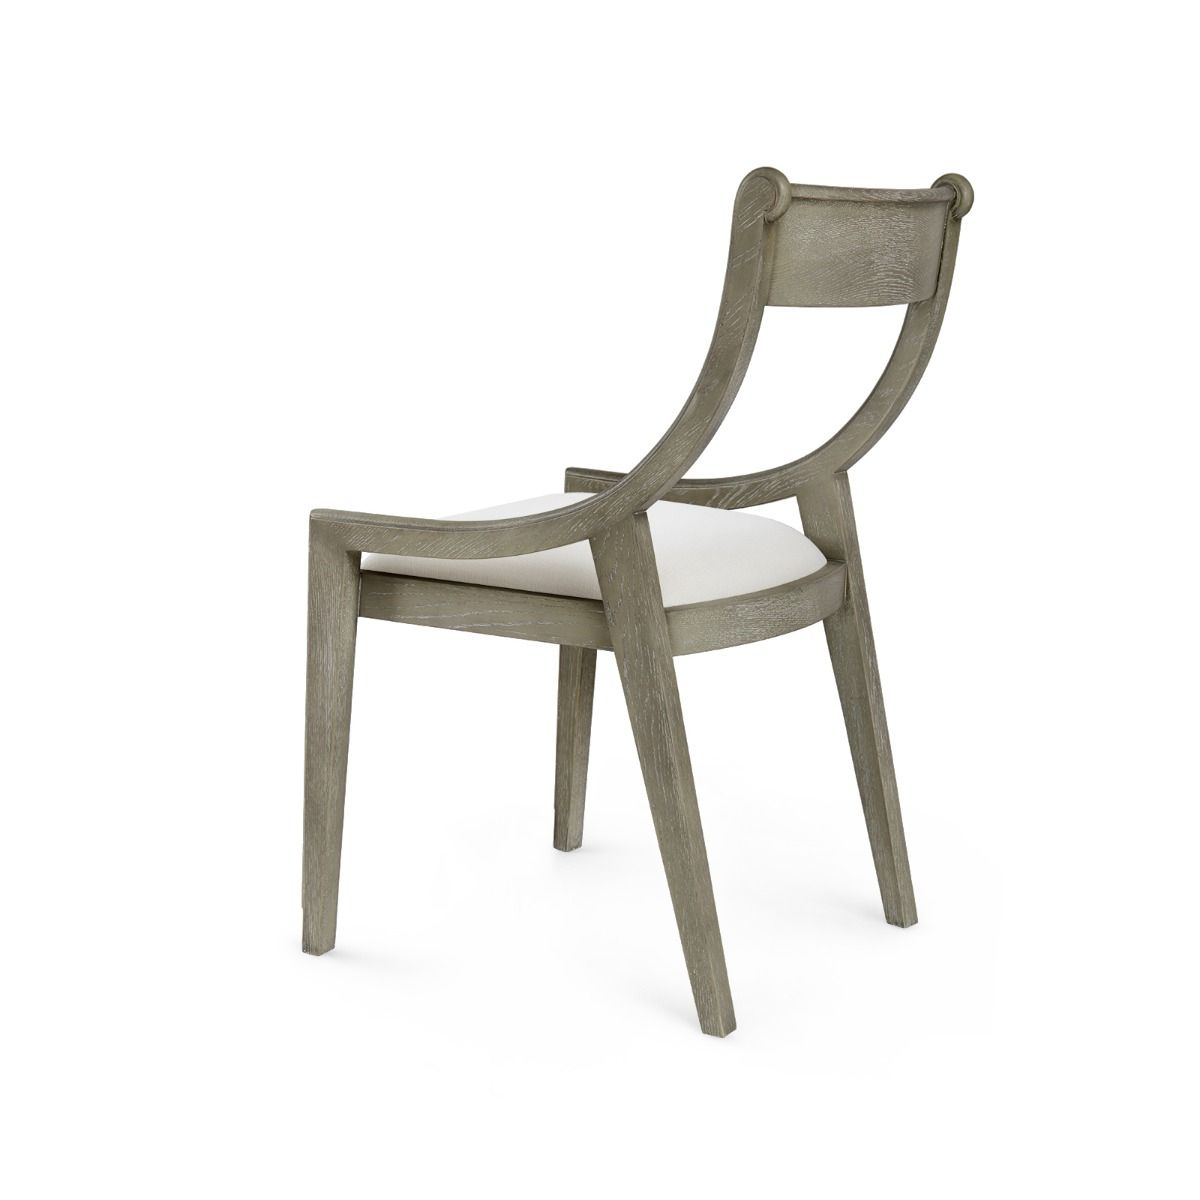 Alexa Chair In Gray